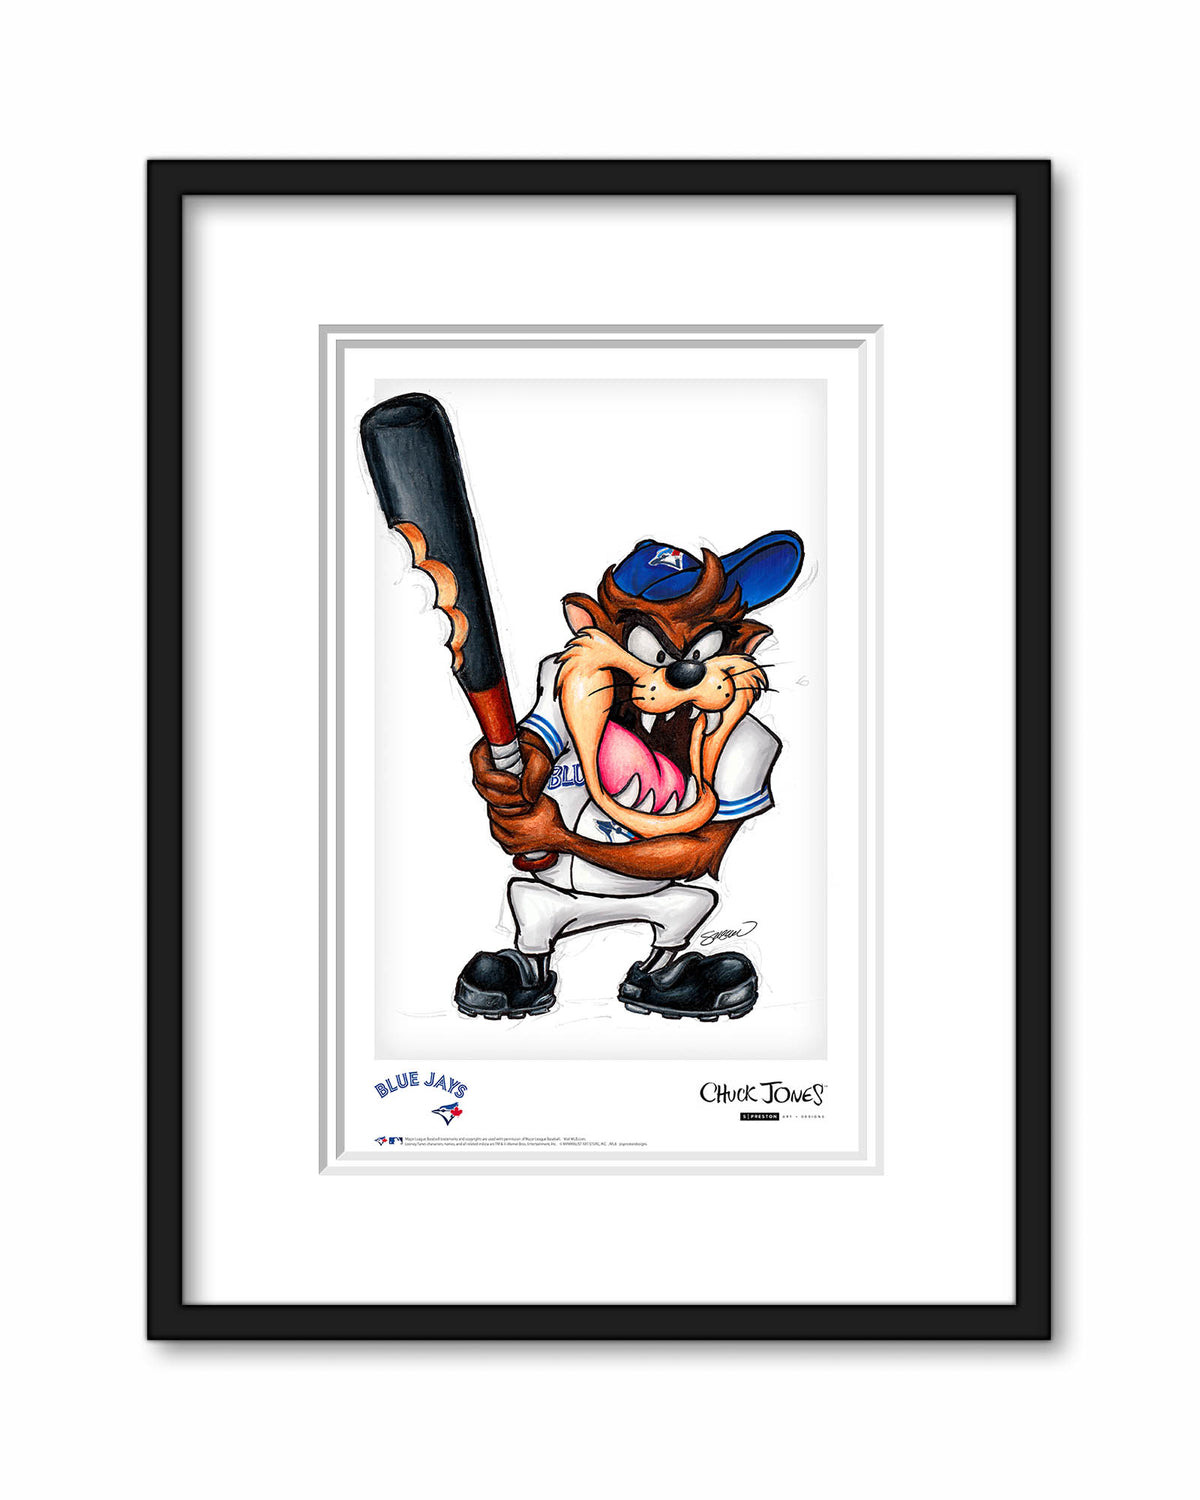 Taz On Deck x MLB Blue Jays Poster Print